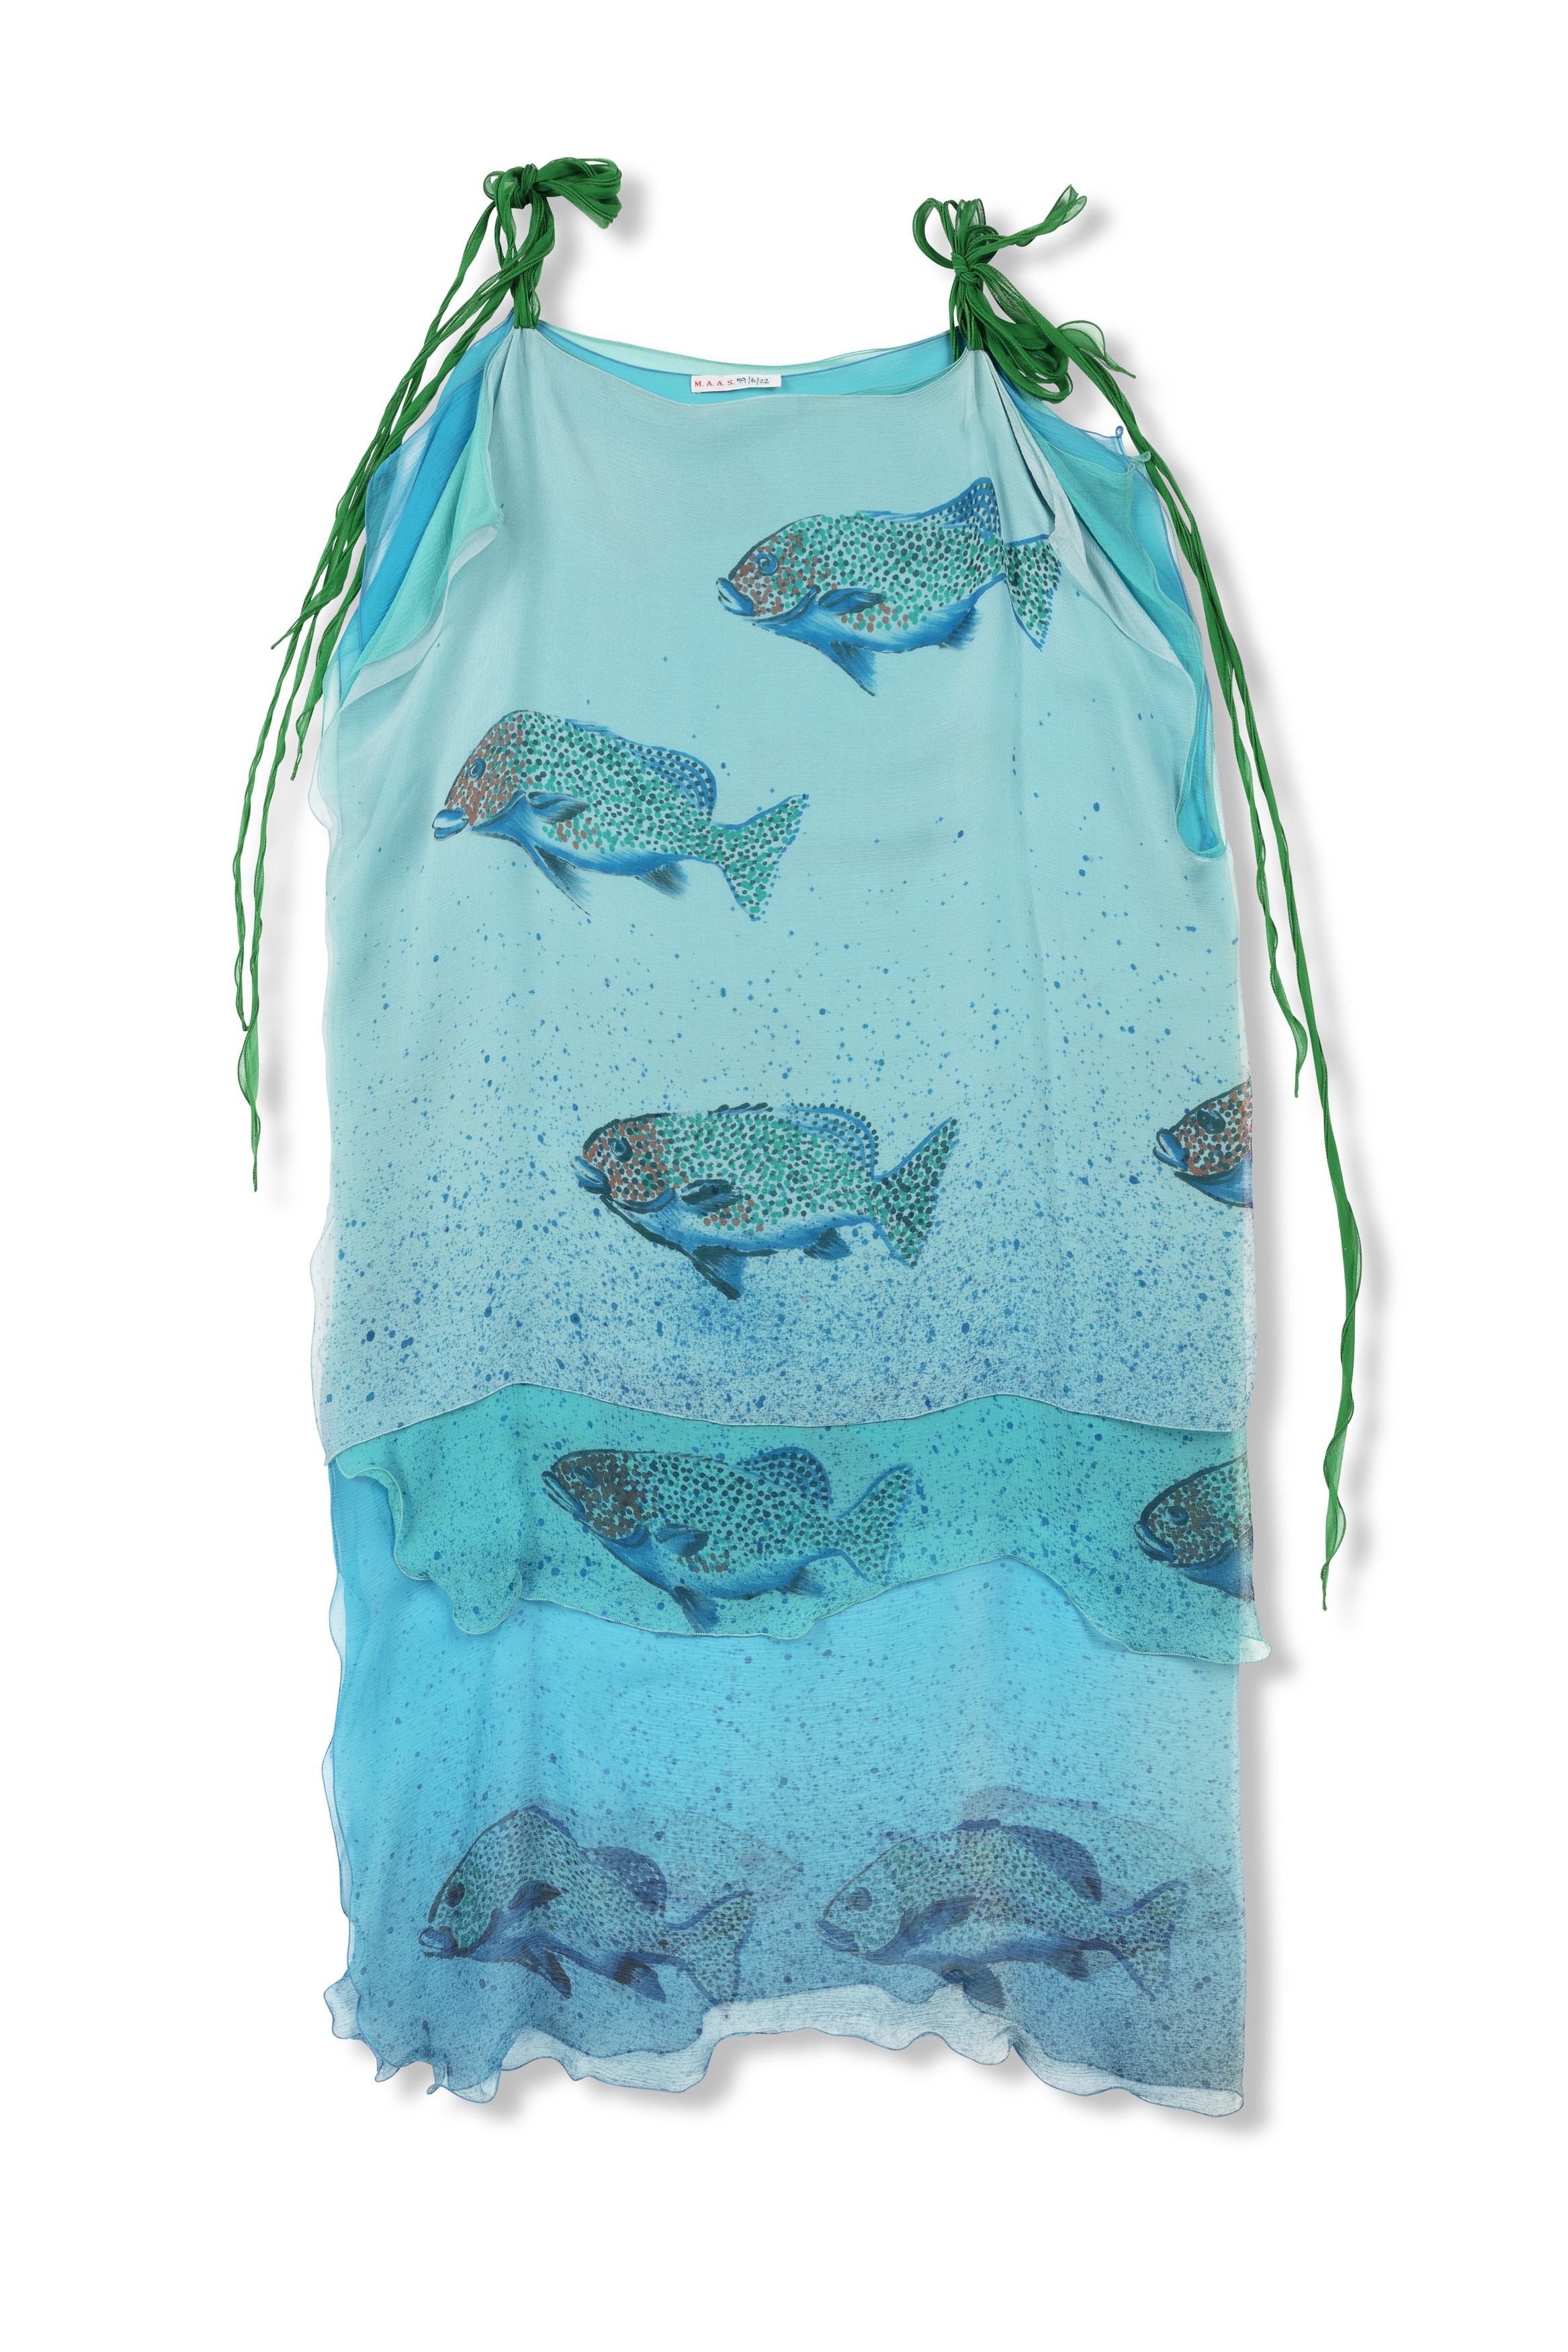 'Fish' dress by Linda Jackson